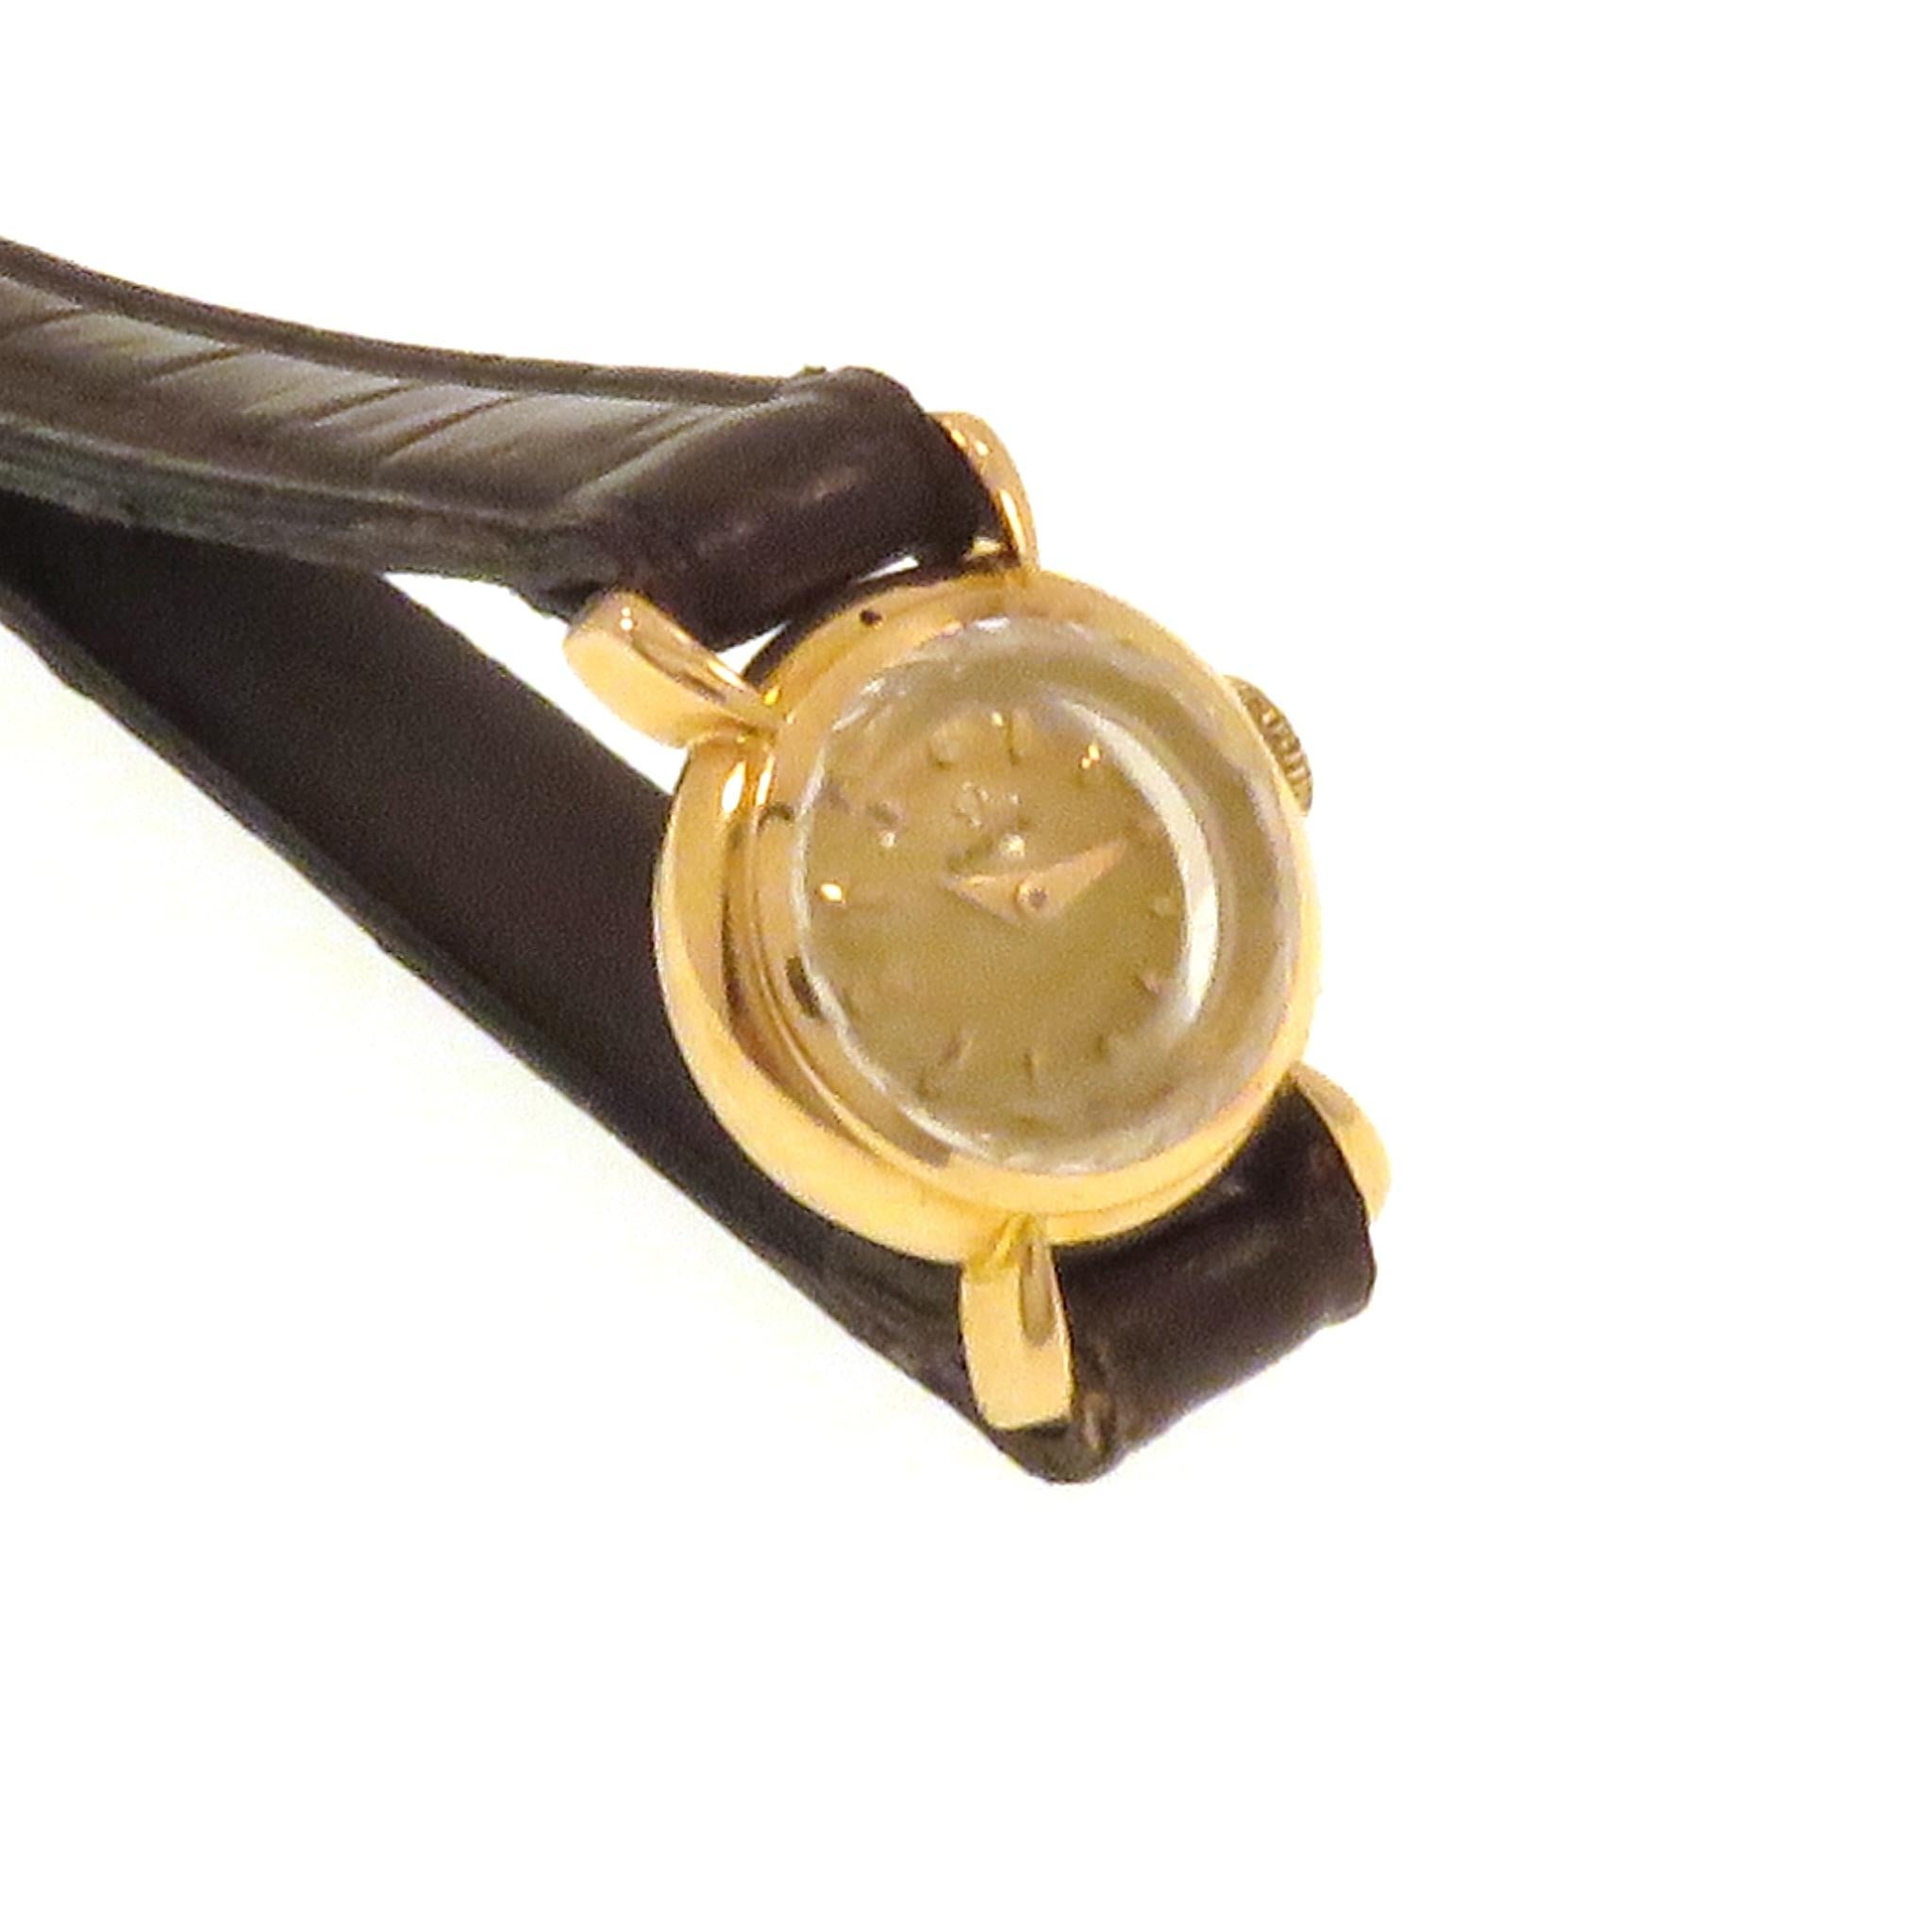 1950s women's watches